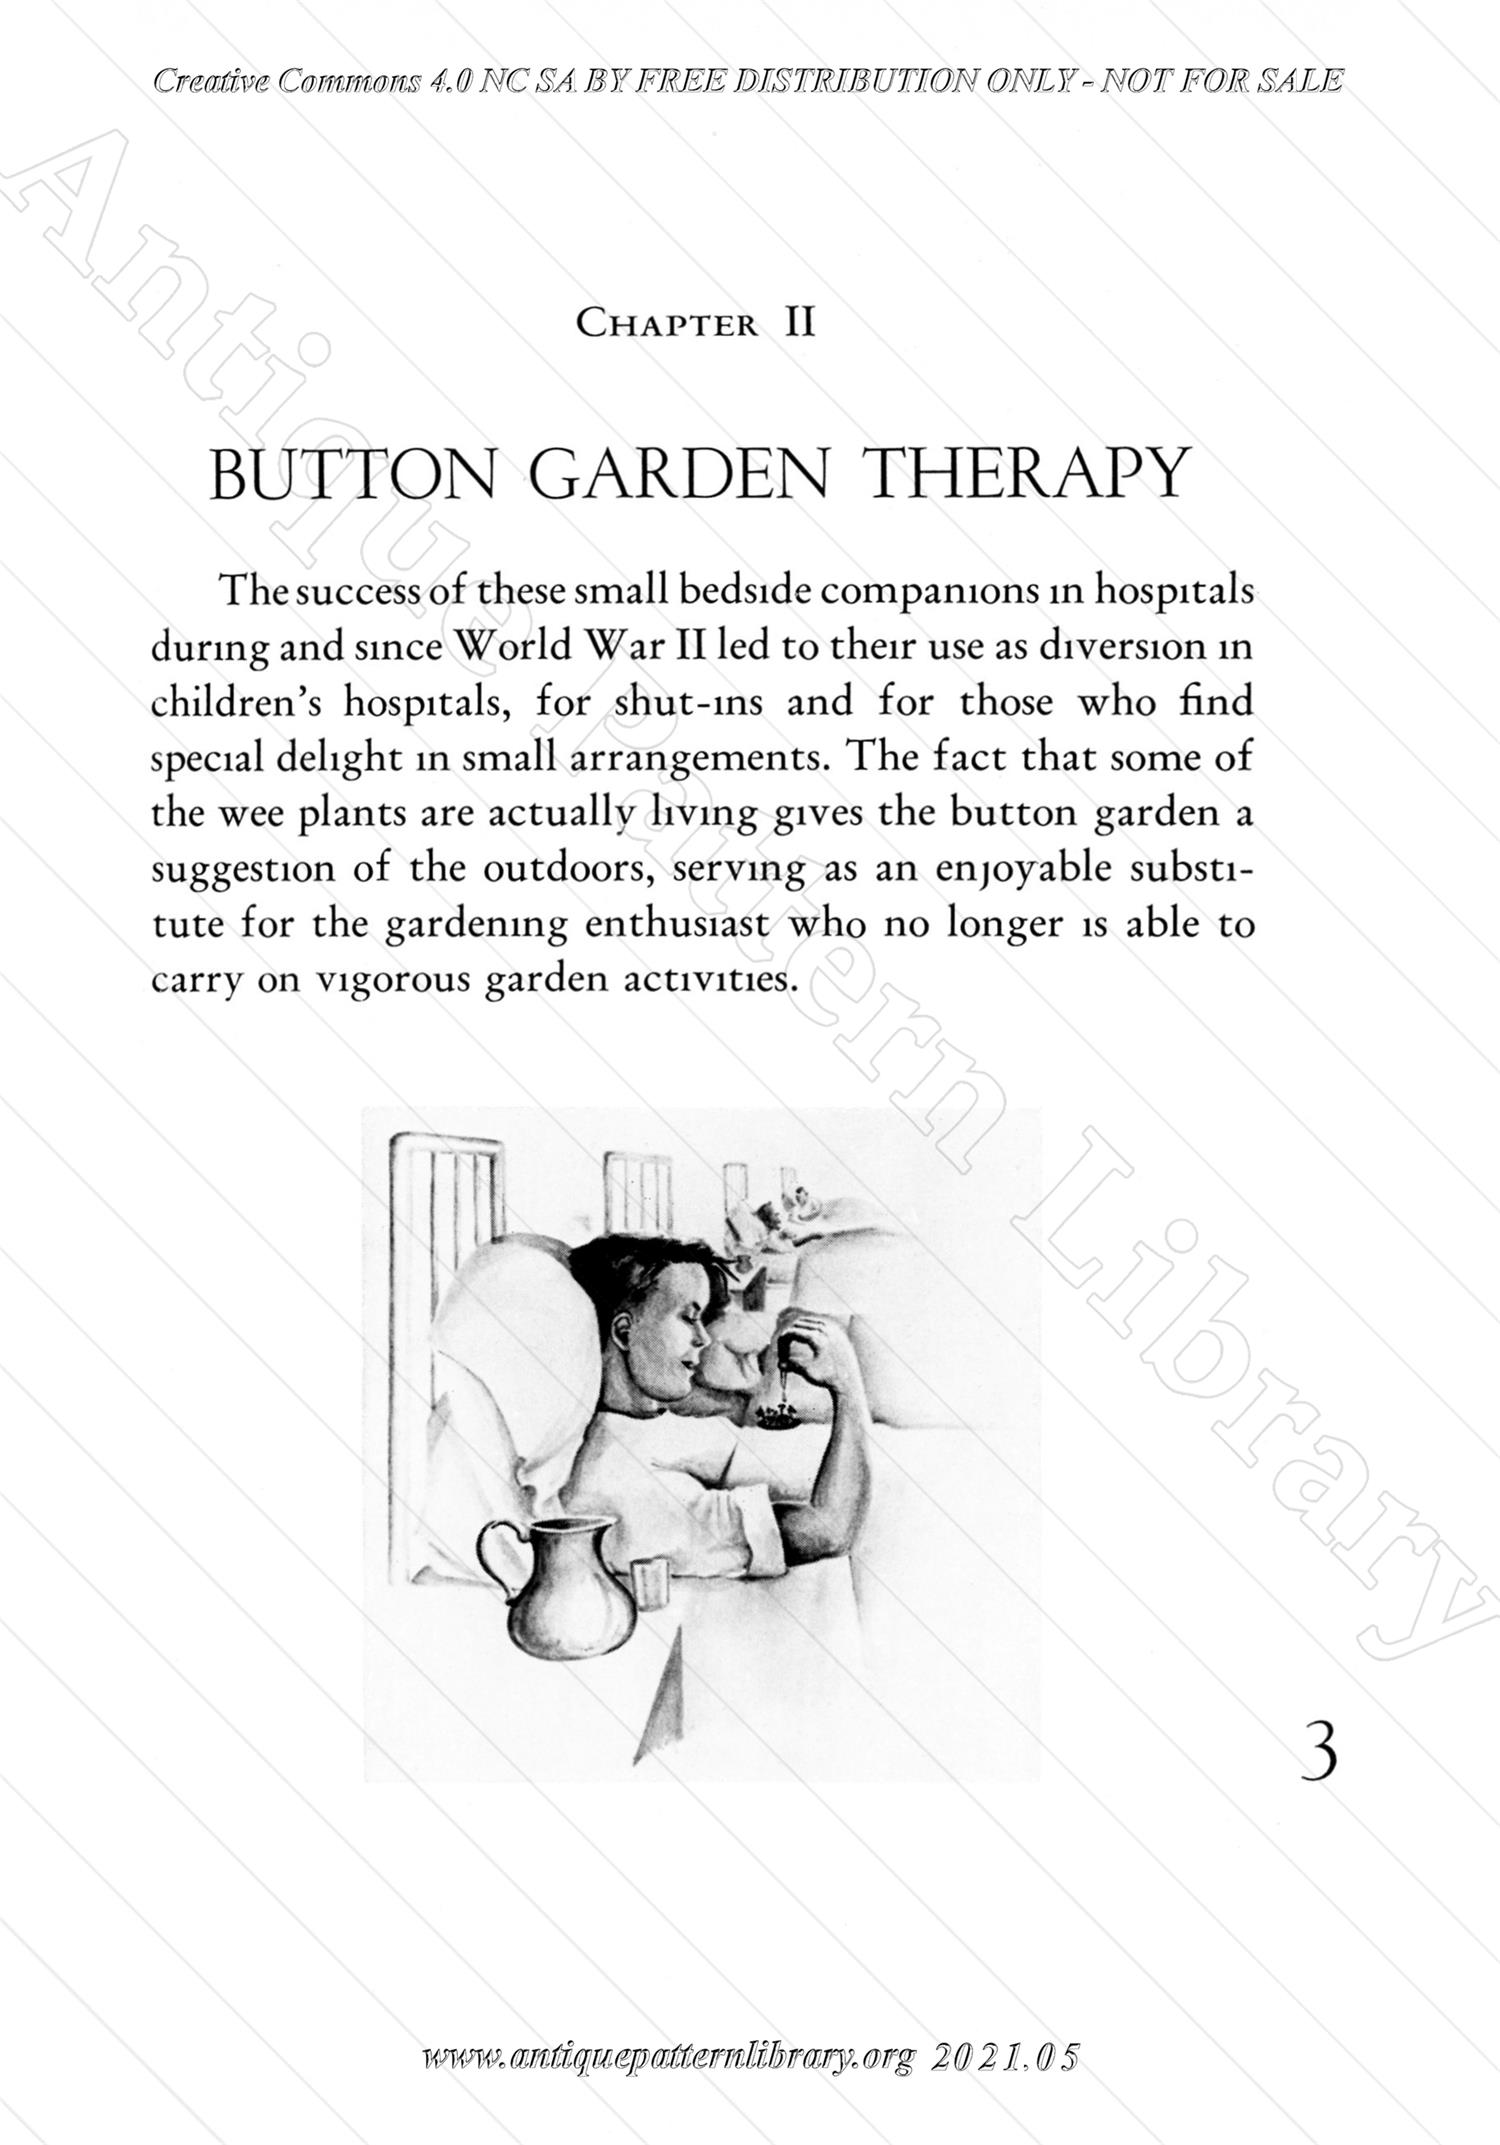 L-HW003 Button Gardens and Diminutive Arrangements